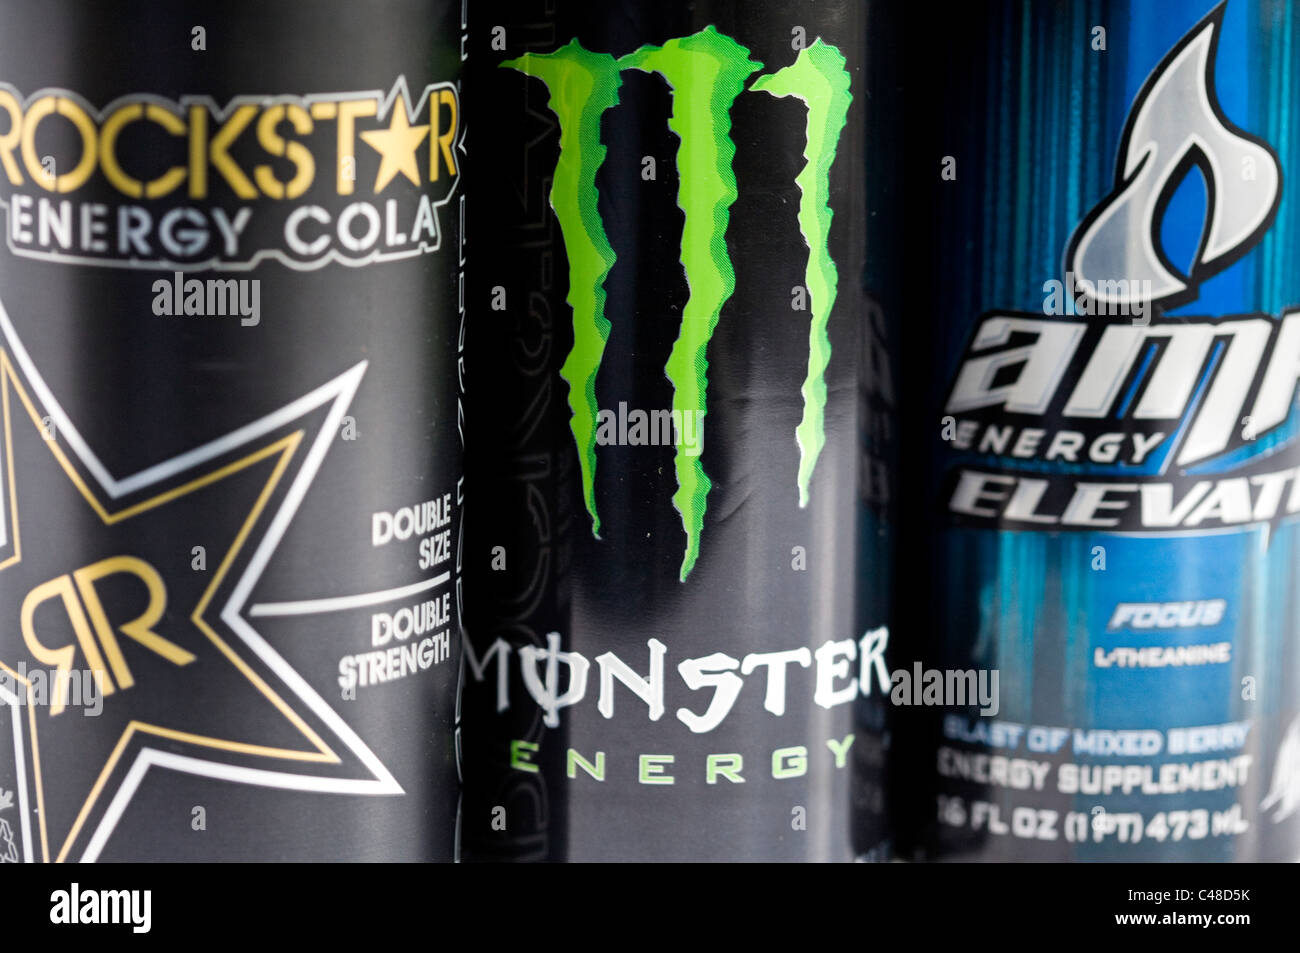 Un mix os RockStar, Monster AMP e Red Bull bevande energetiche. Foto Stock